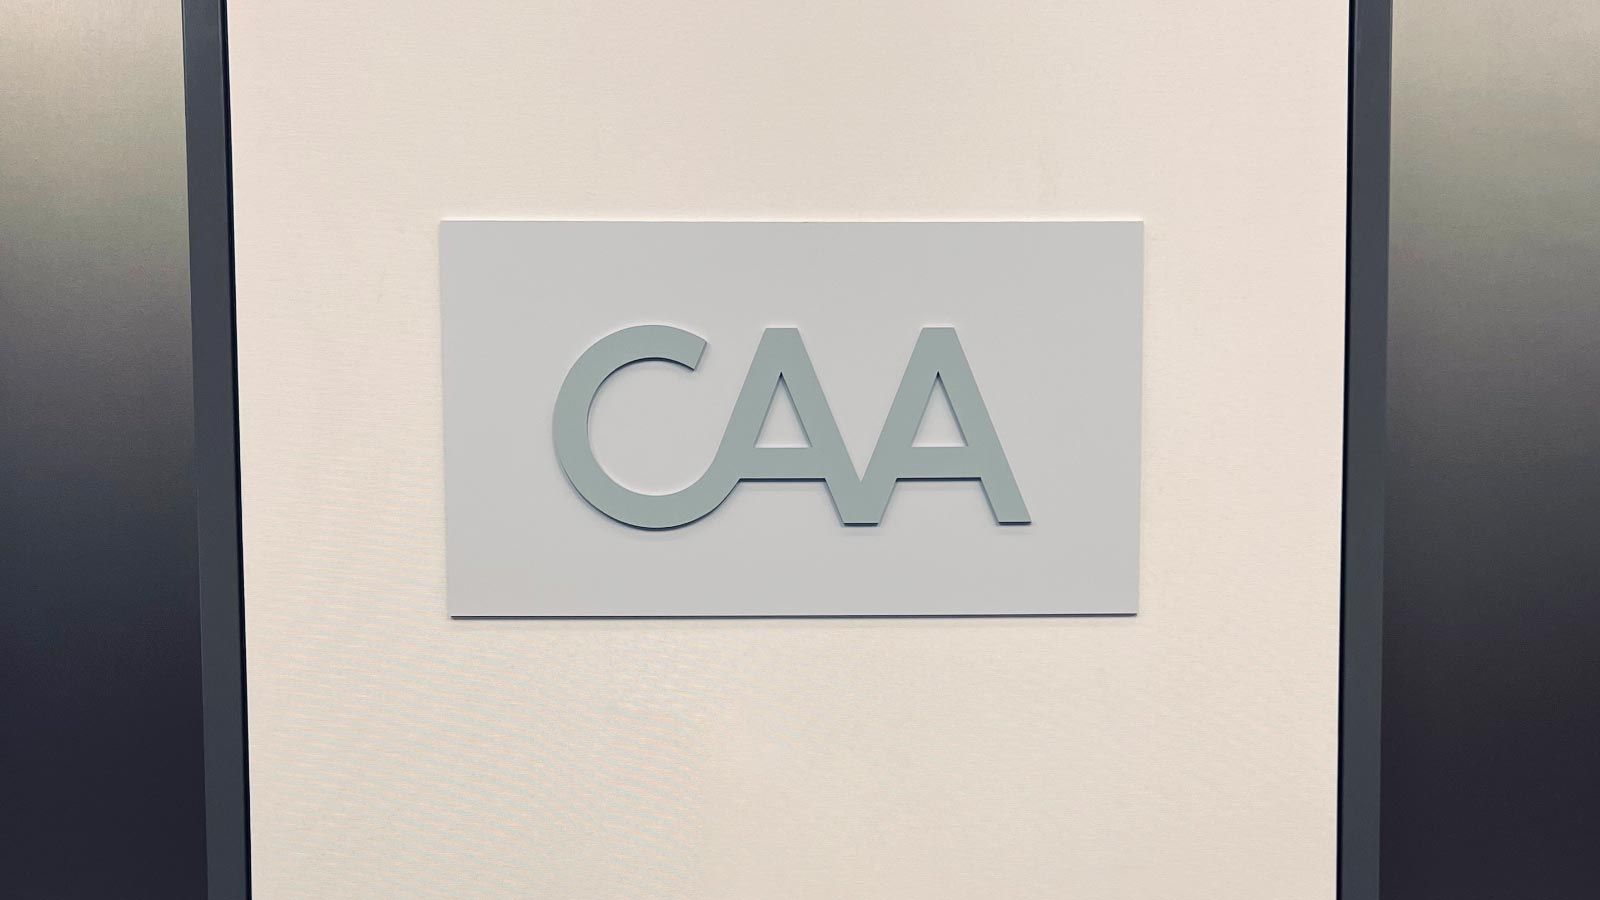 CAA interior logo sign made of acrylic